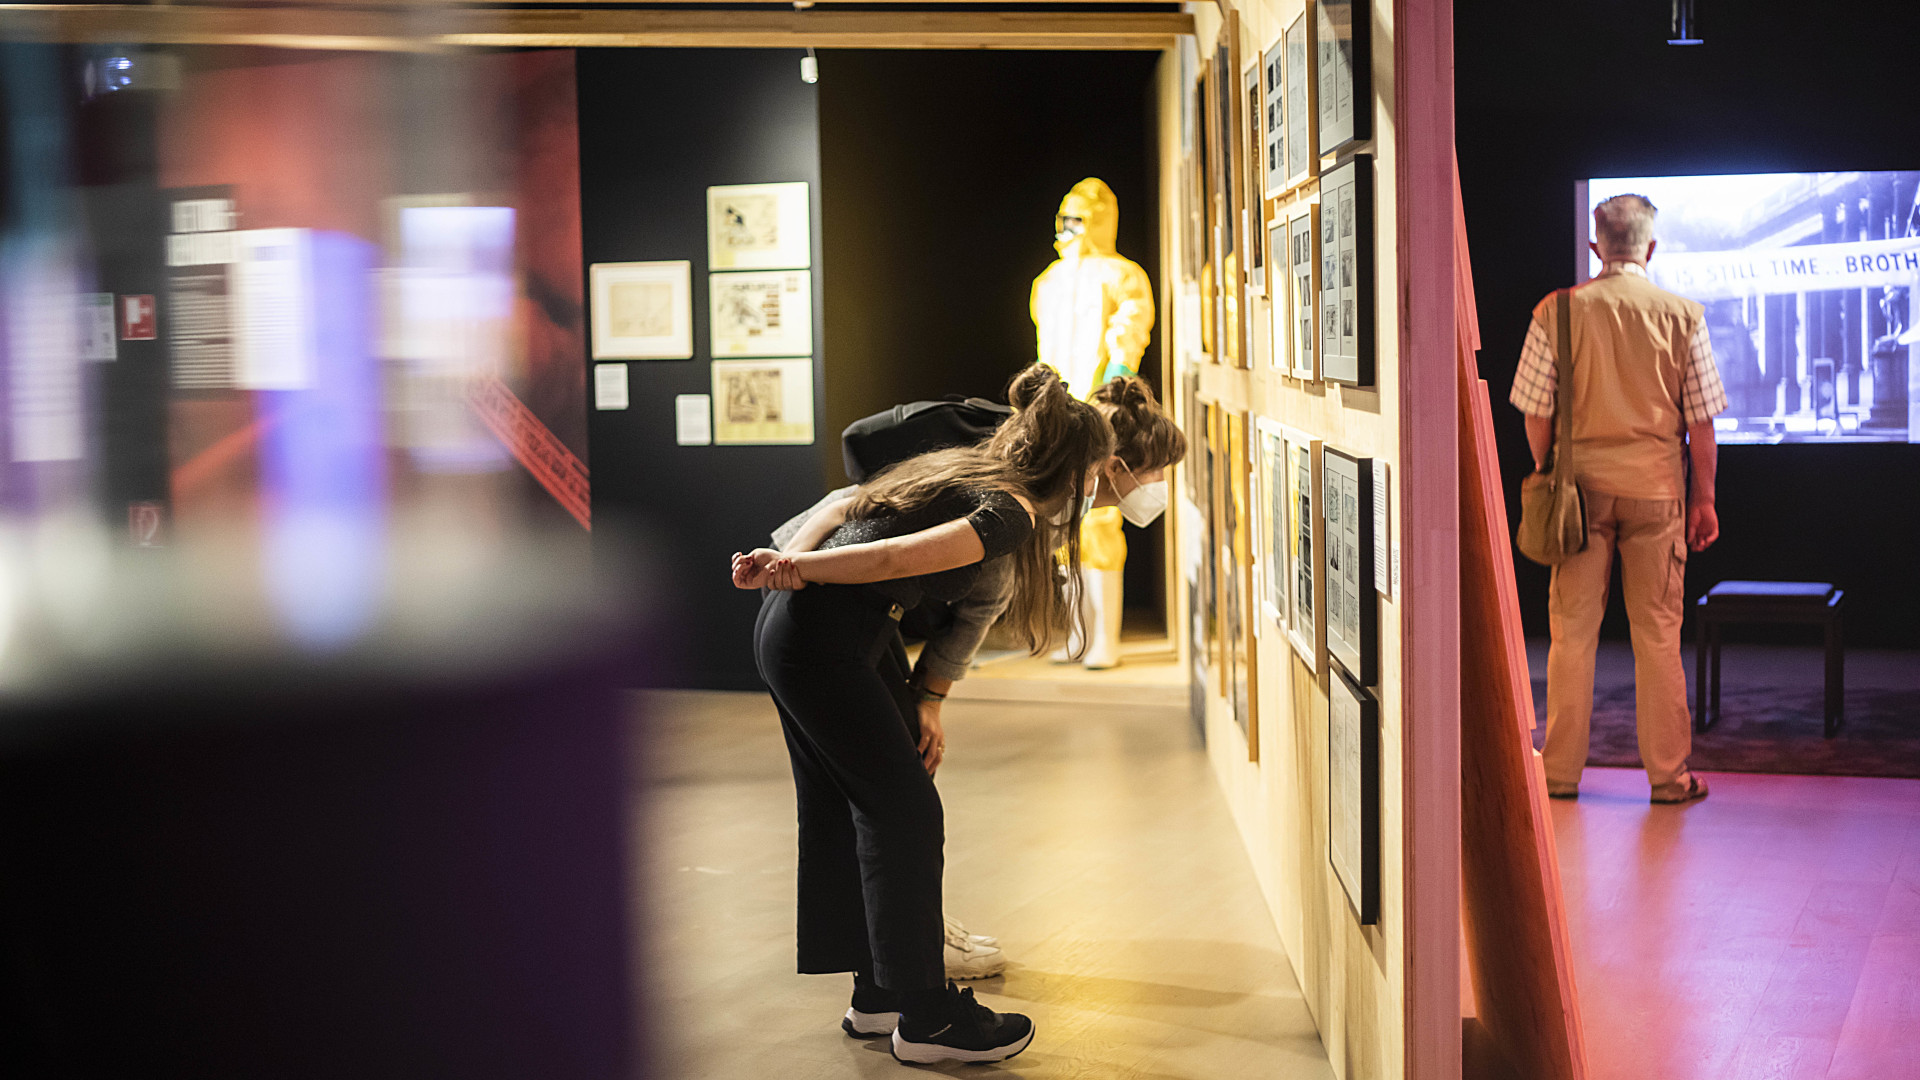 Zwei Ausstellungsbesucher:innen betrachten gerahmte Bilder an der Wand.